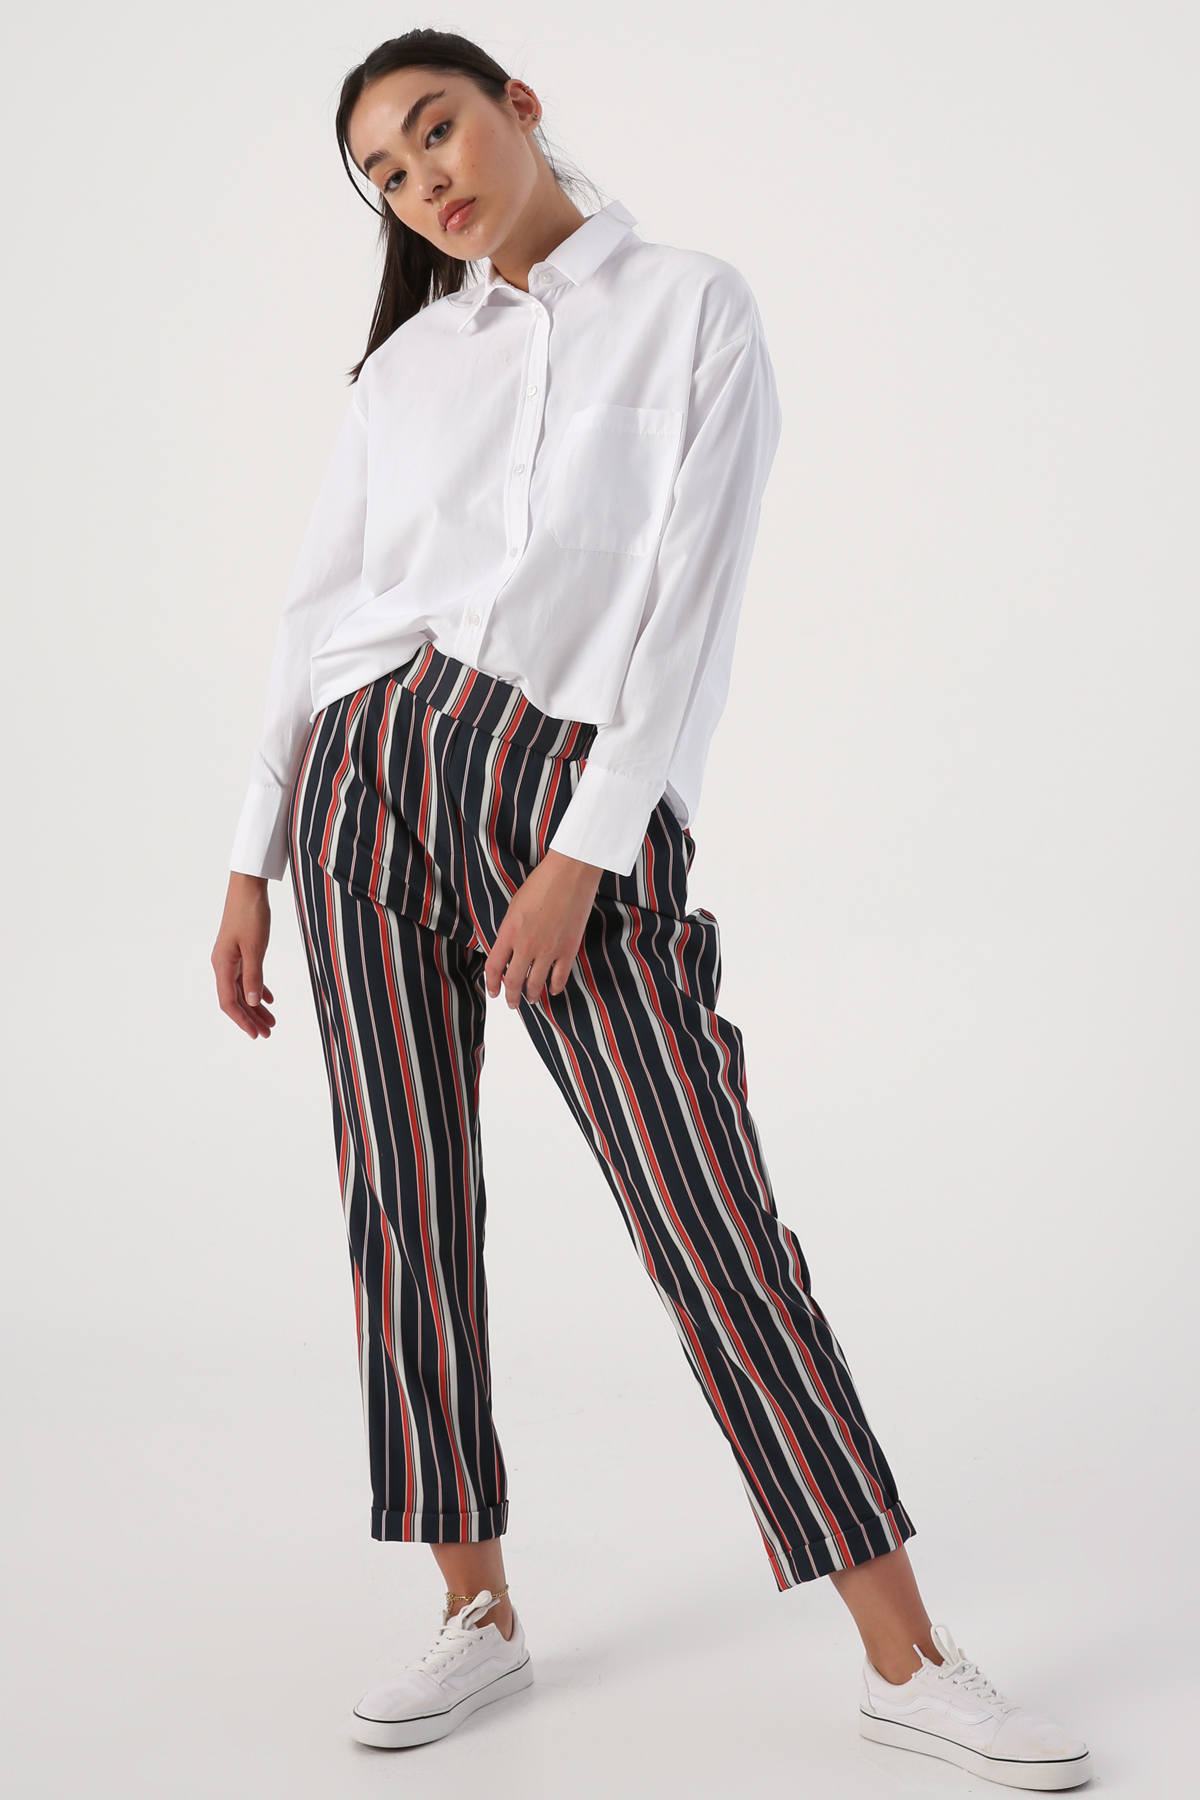 Striped Patterned Elastic Waist Pants